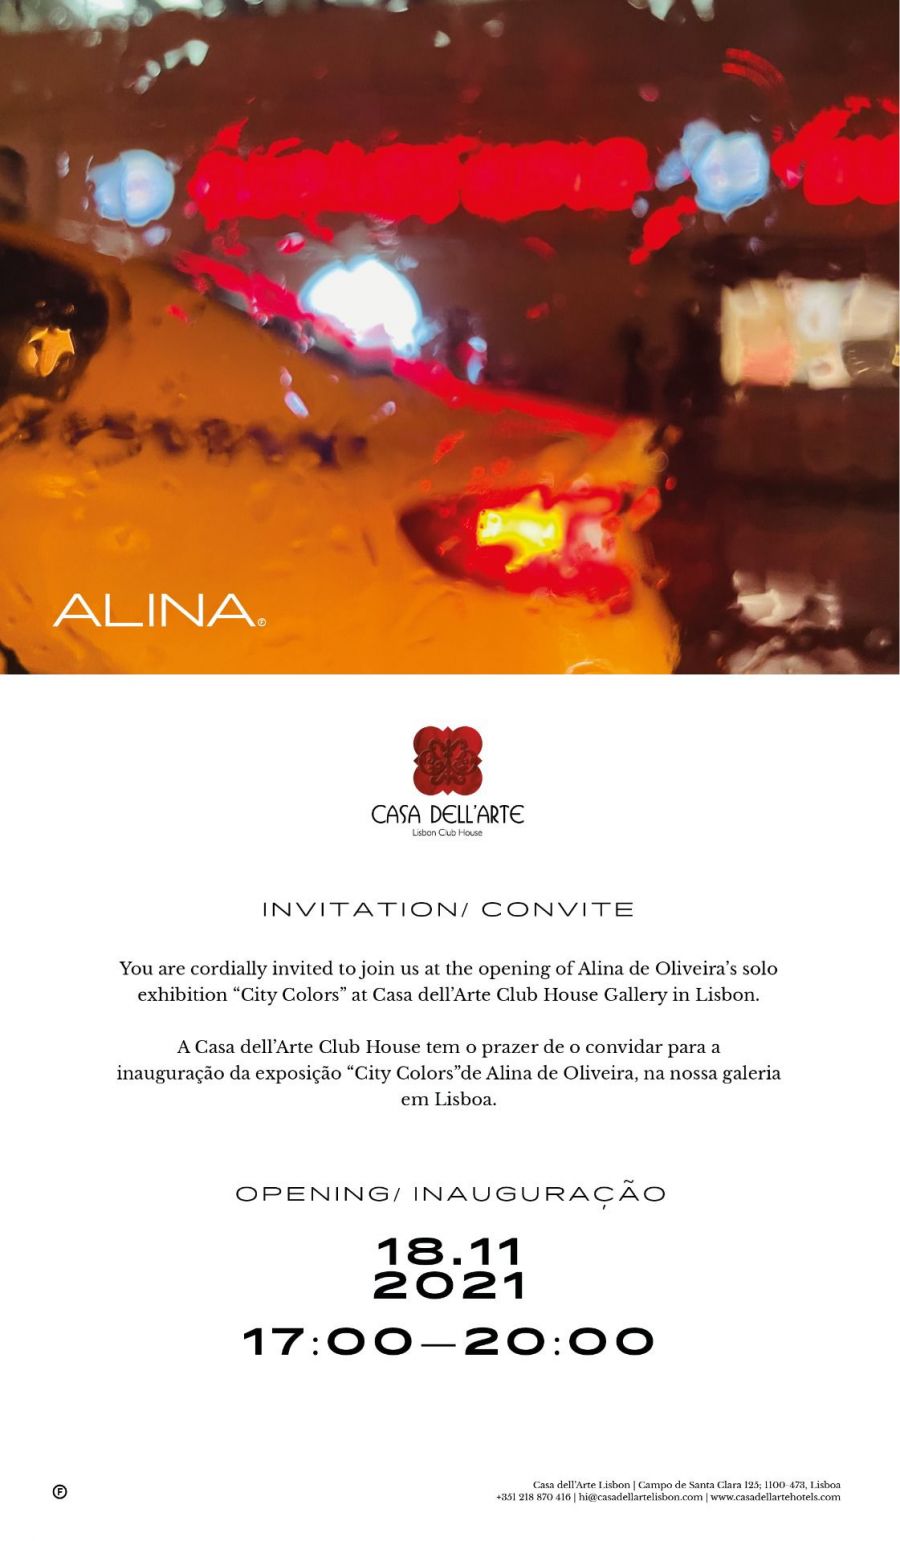 Opening exhibition | “City Colors” by Alina de Oliveira | Casa dell’Arte Gallery